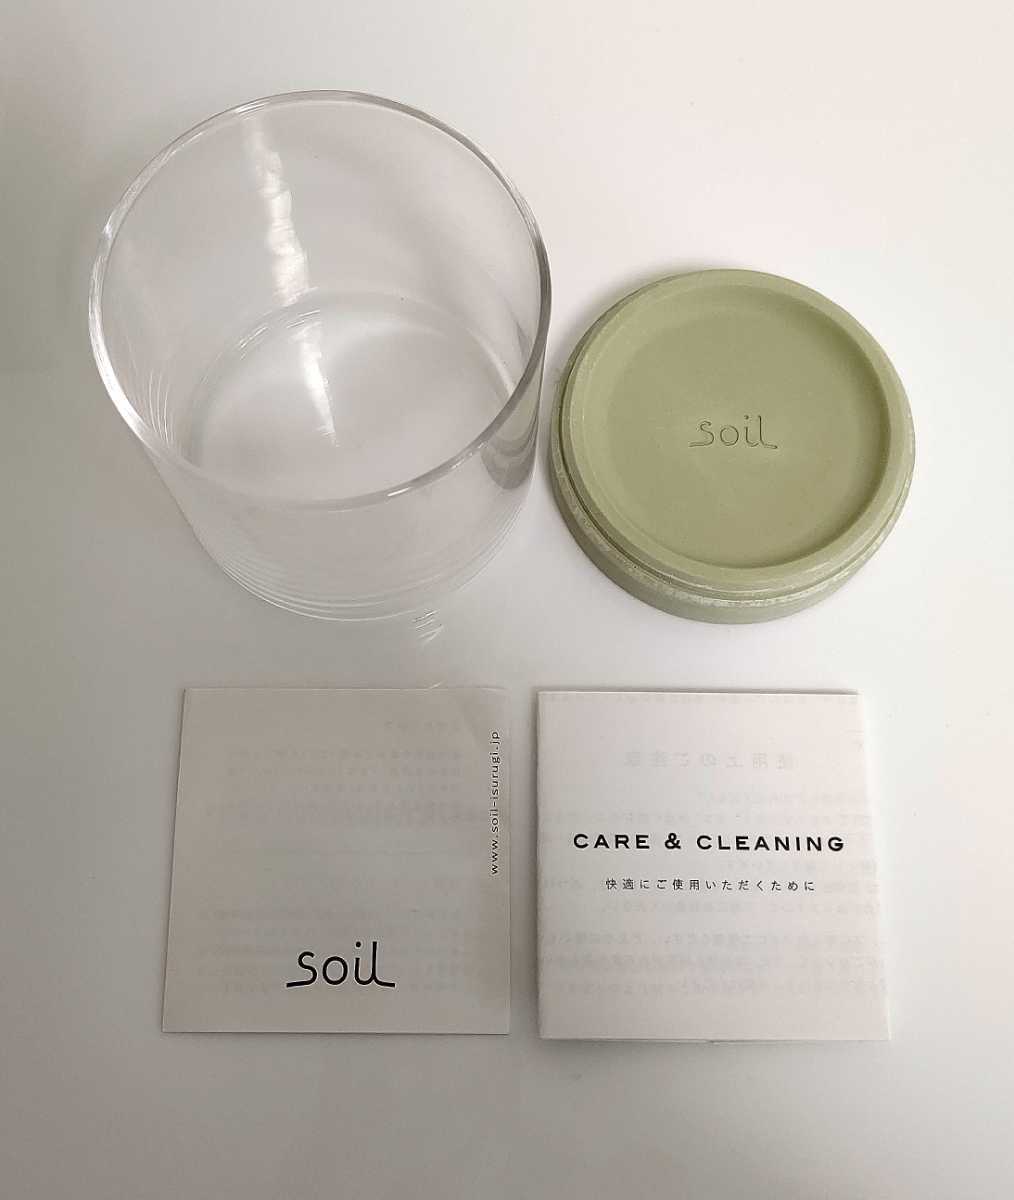 soil 珪藻土 フードコンテナ ガラス 食品調湿容器(グリーン)_画像2